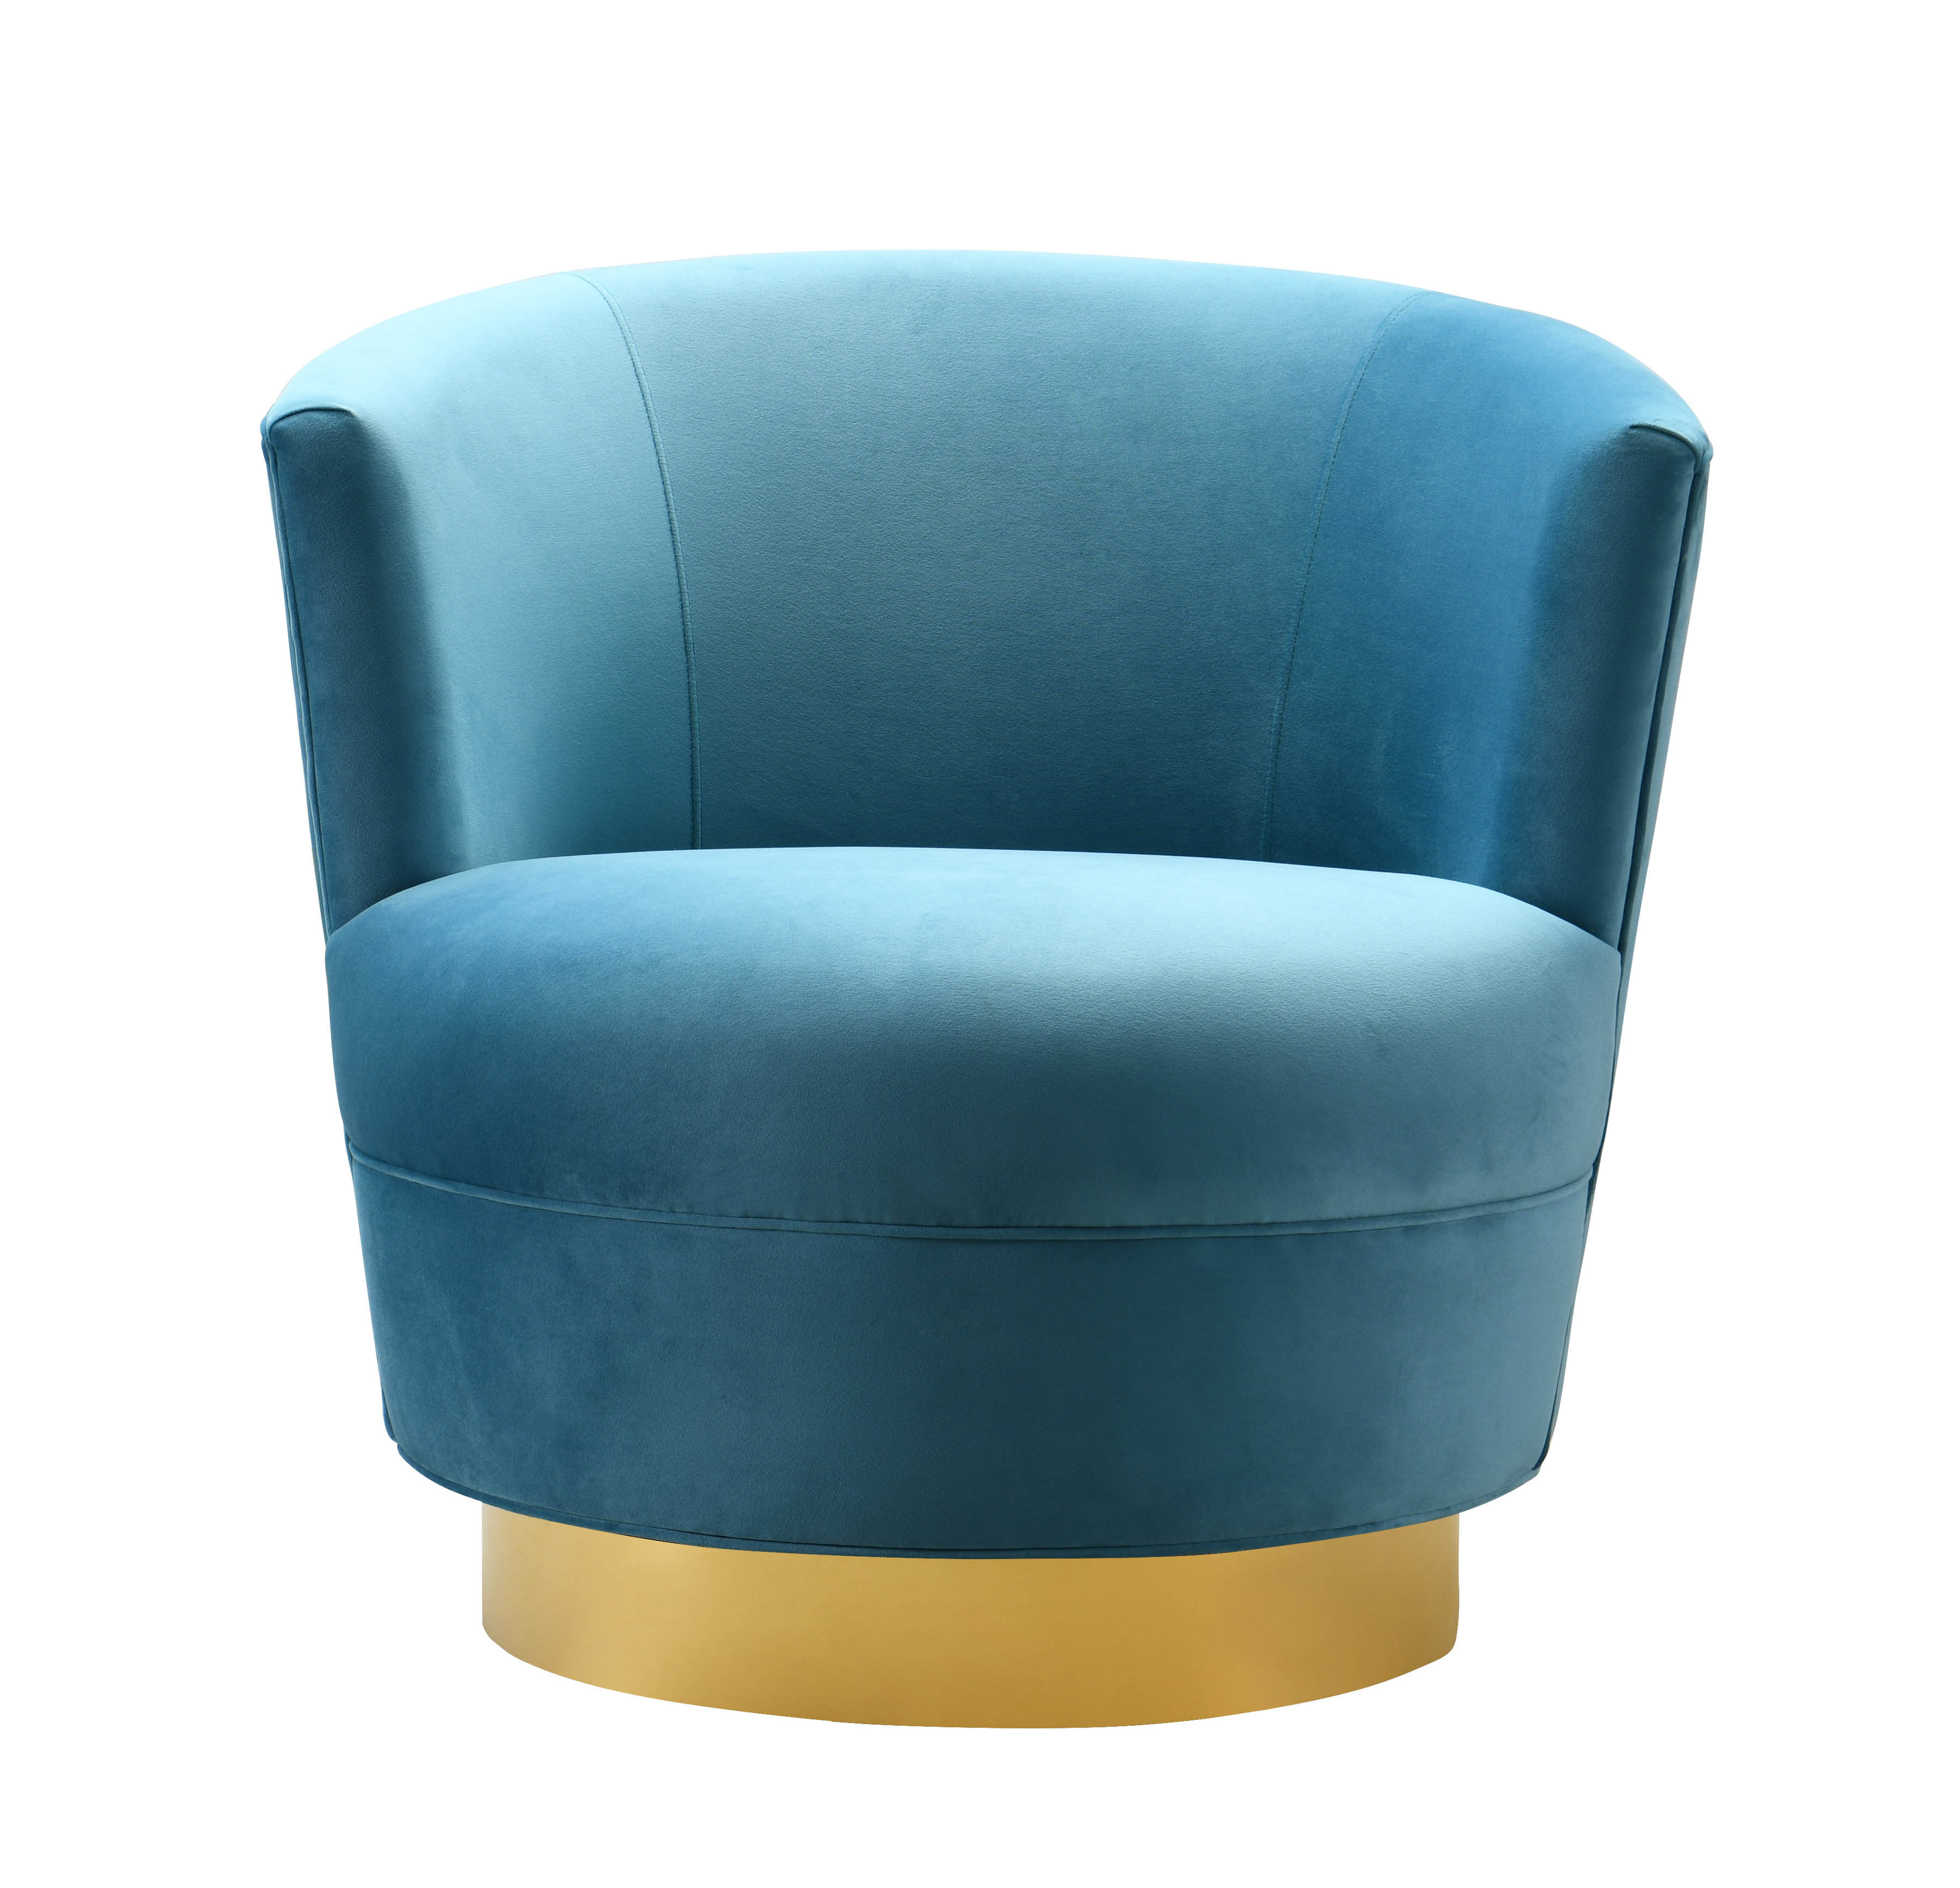 Noah Gold Base Lake Blue Swivel Chair by TOV Furniture - image 1 of 6